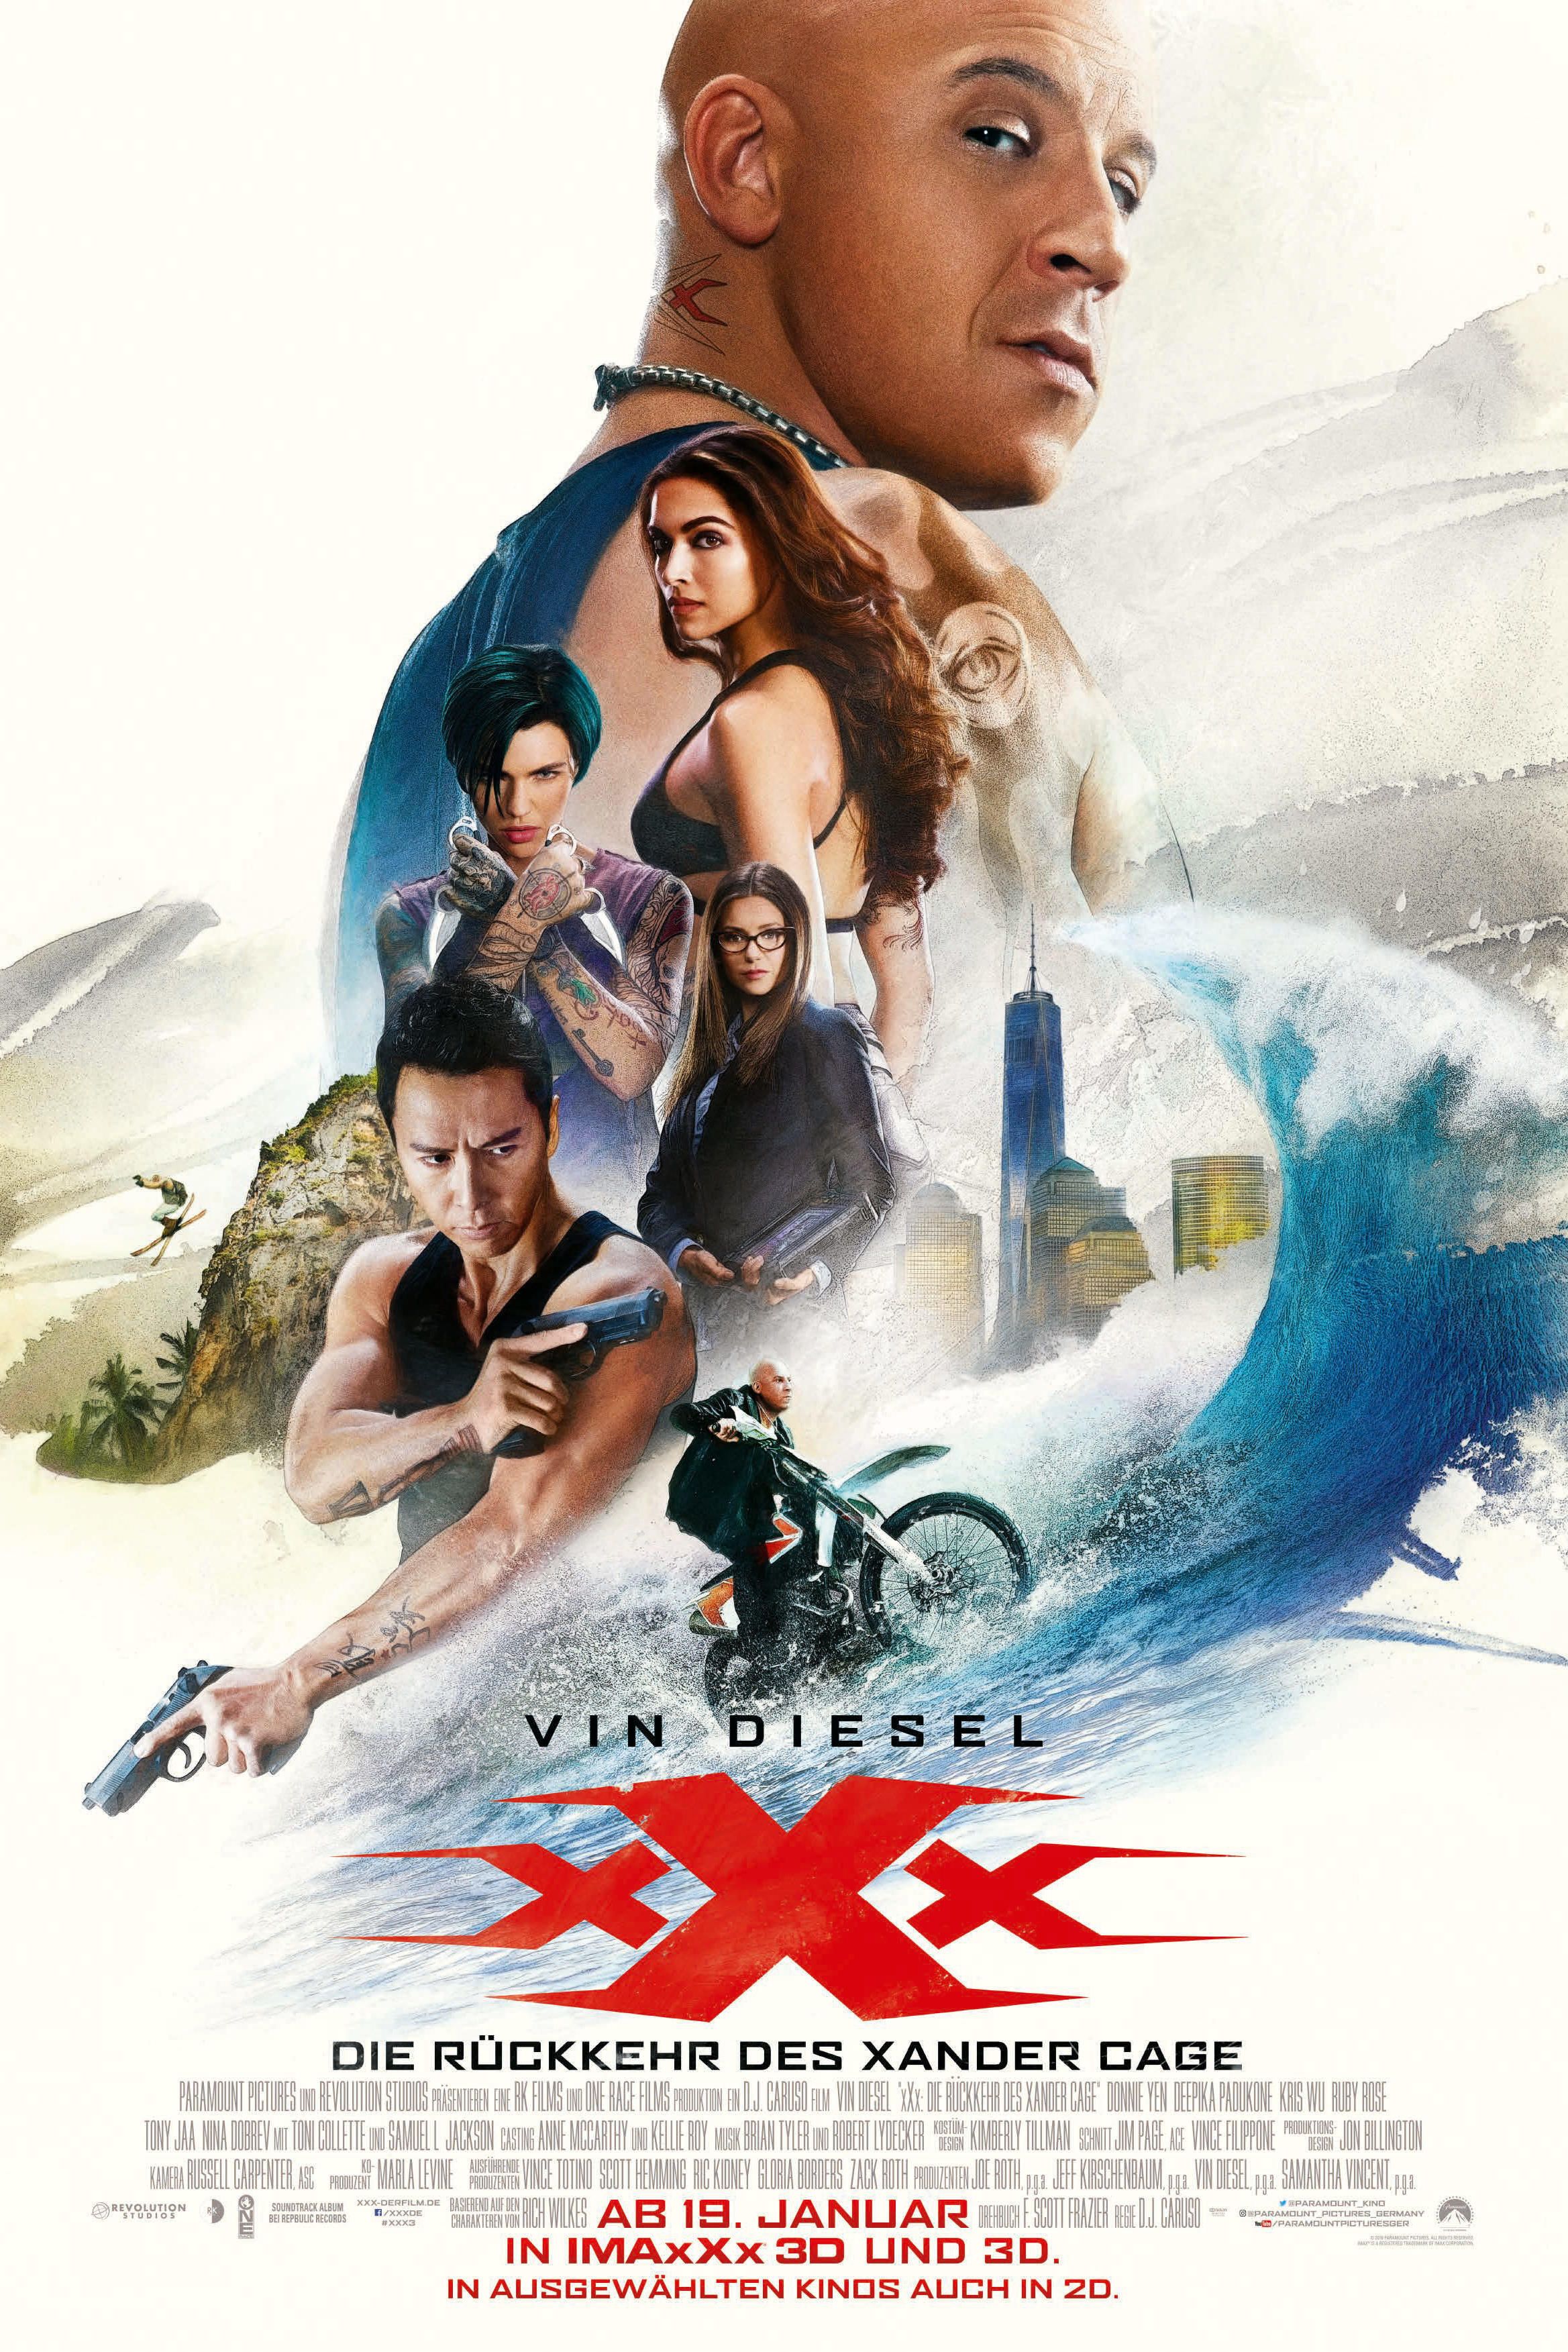 Brie Larson Xxx - xXx: Return of Xander Cage (2017) Movie Information & Trailers | KinoCheck